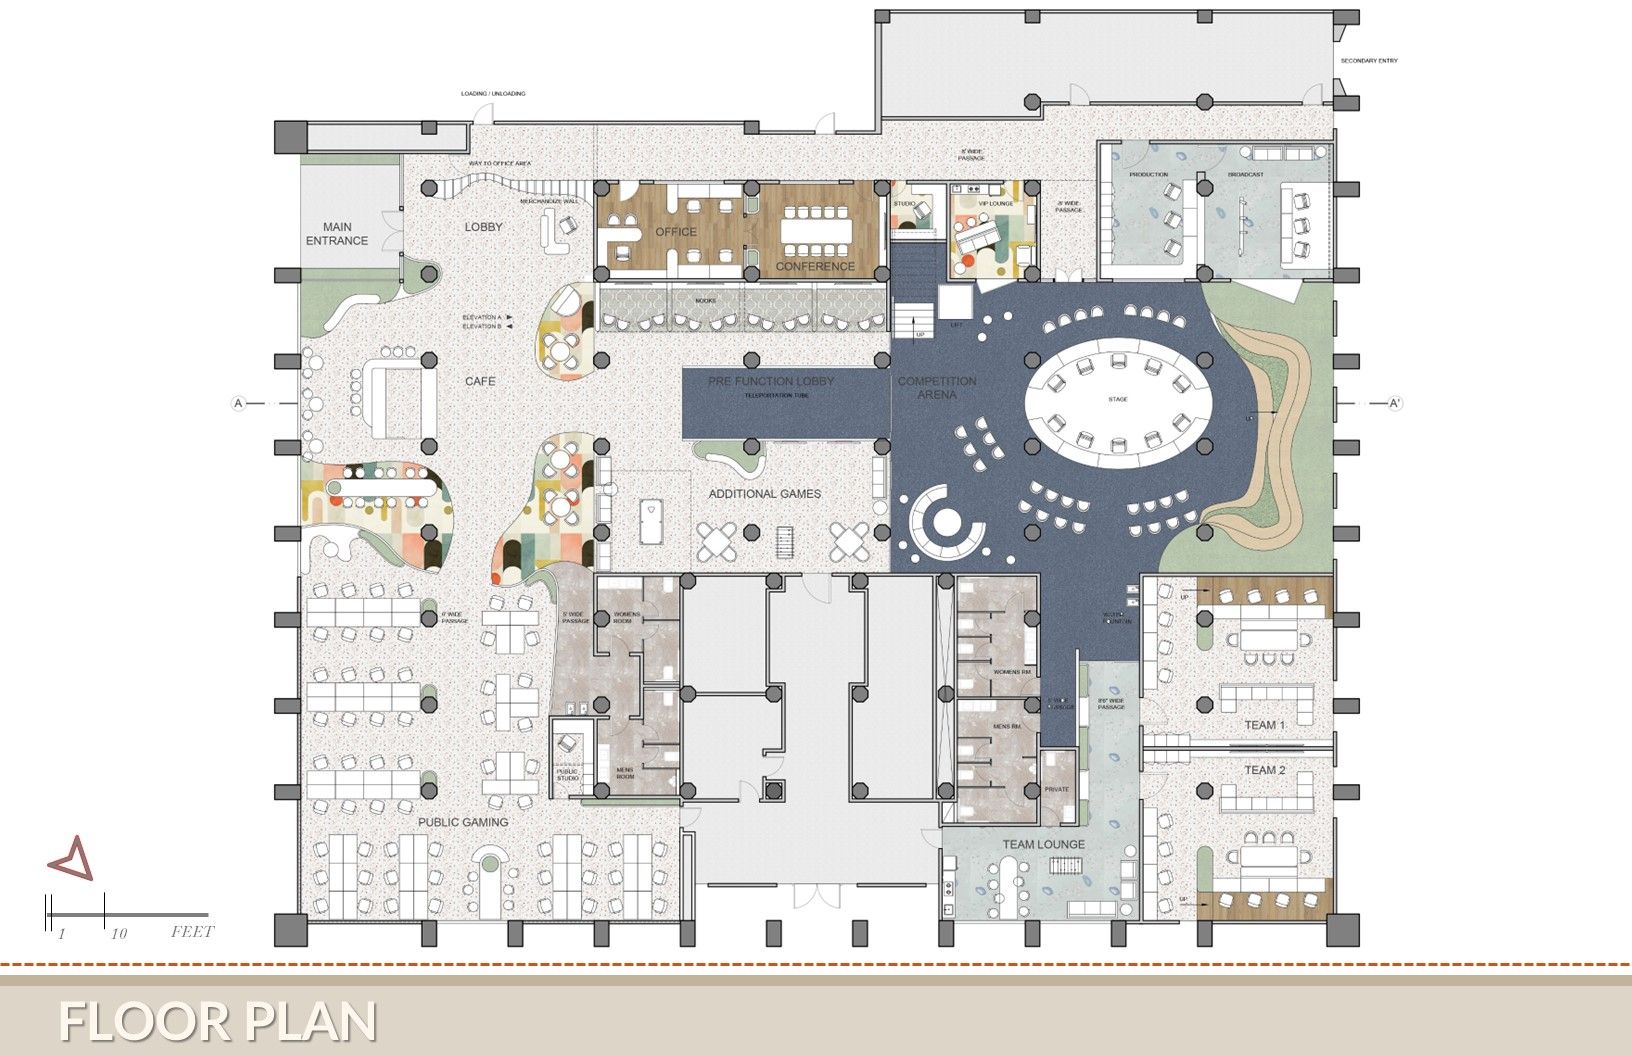 Esport Facility - Floor Plan - Arpita Muley